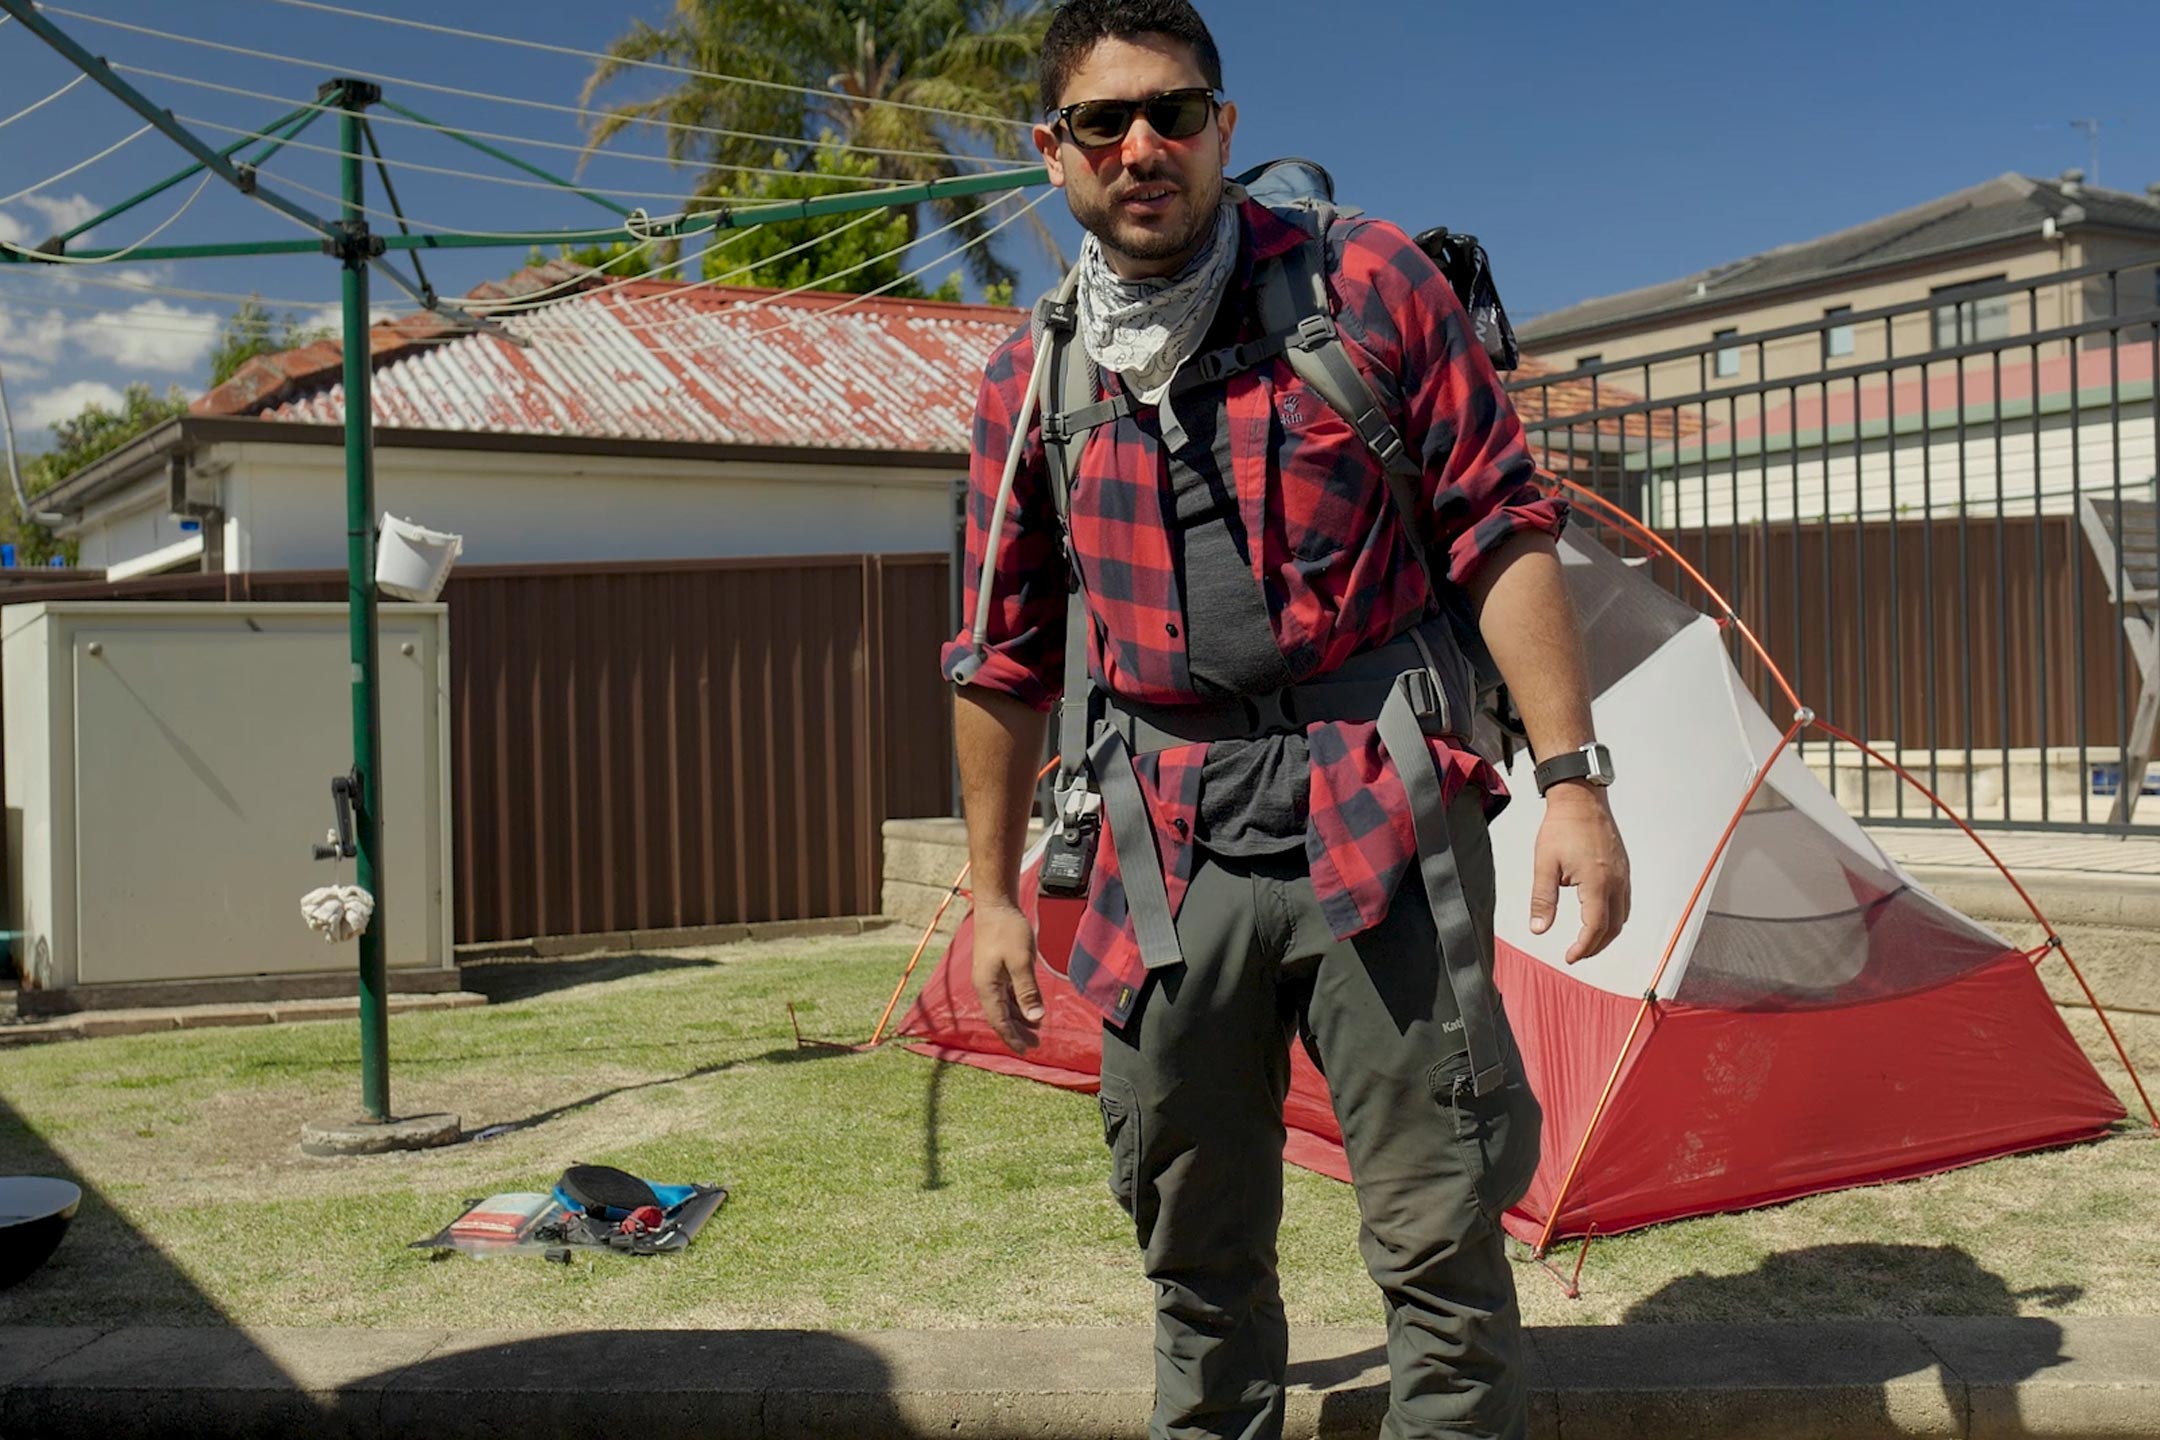 Man in backyard with camping gear